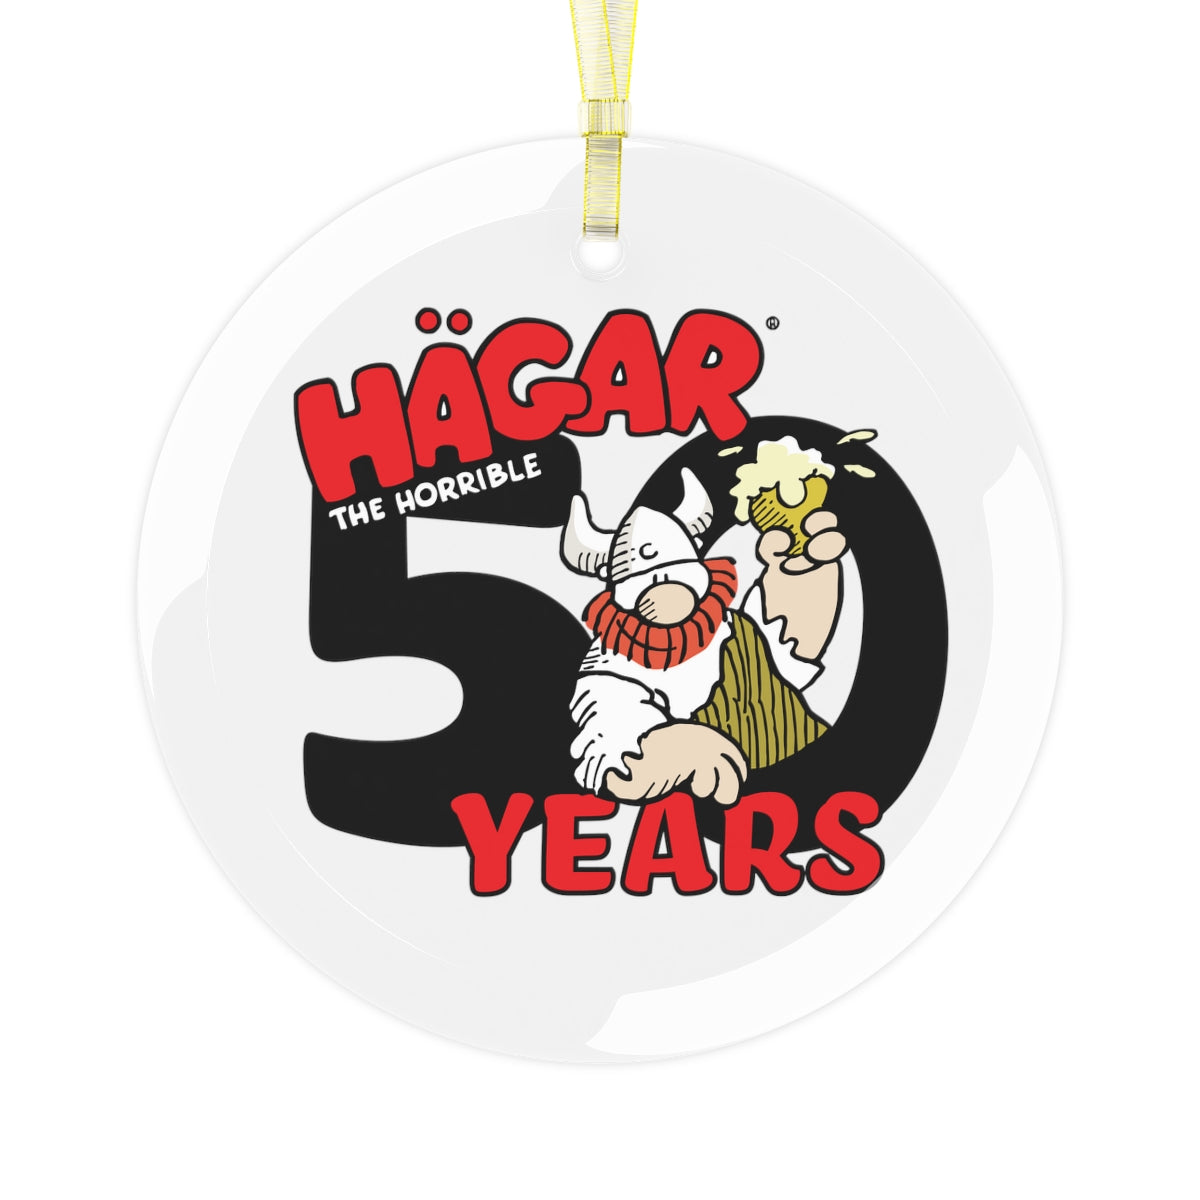 HAGAR THE HORRIBLE Commemorative 50th Anniversary Glass Ornament